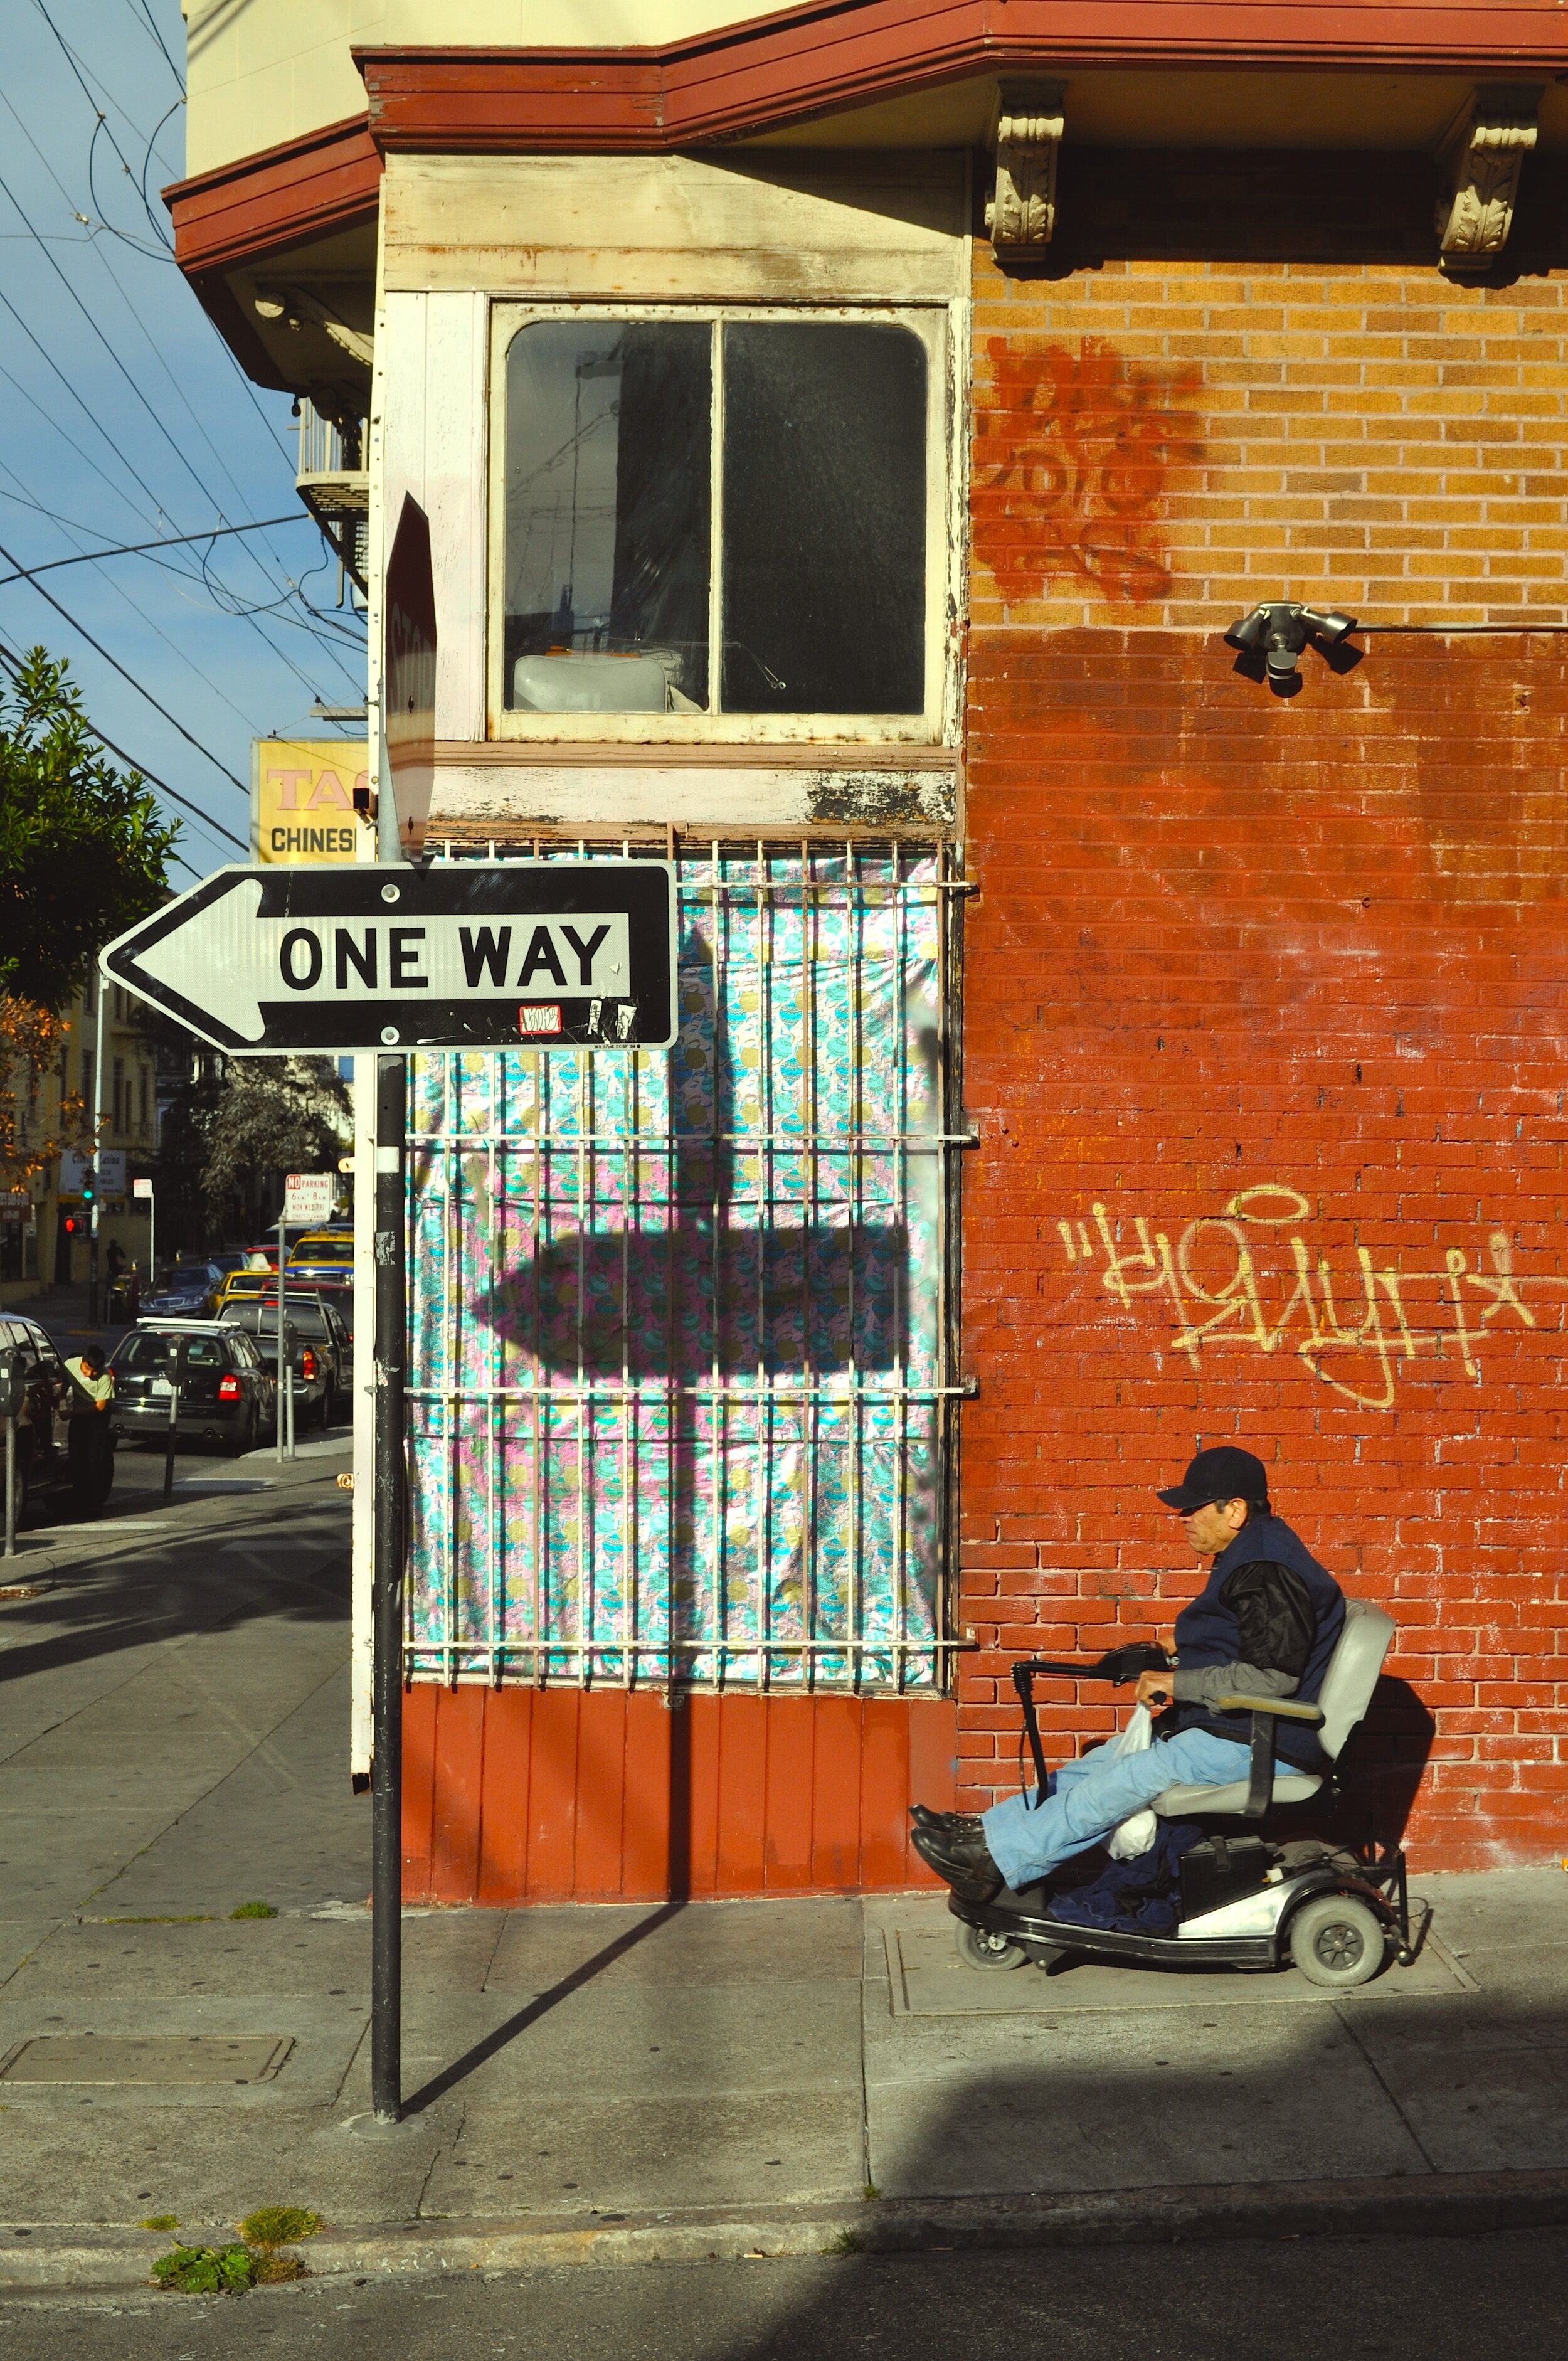 One Way Wheelchair - San Francisco, California (2010)